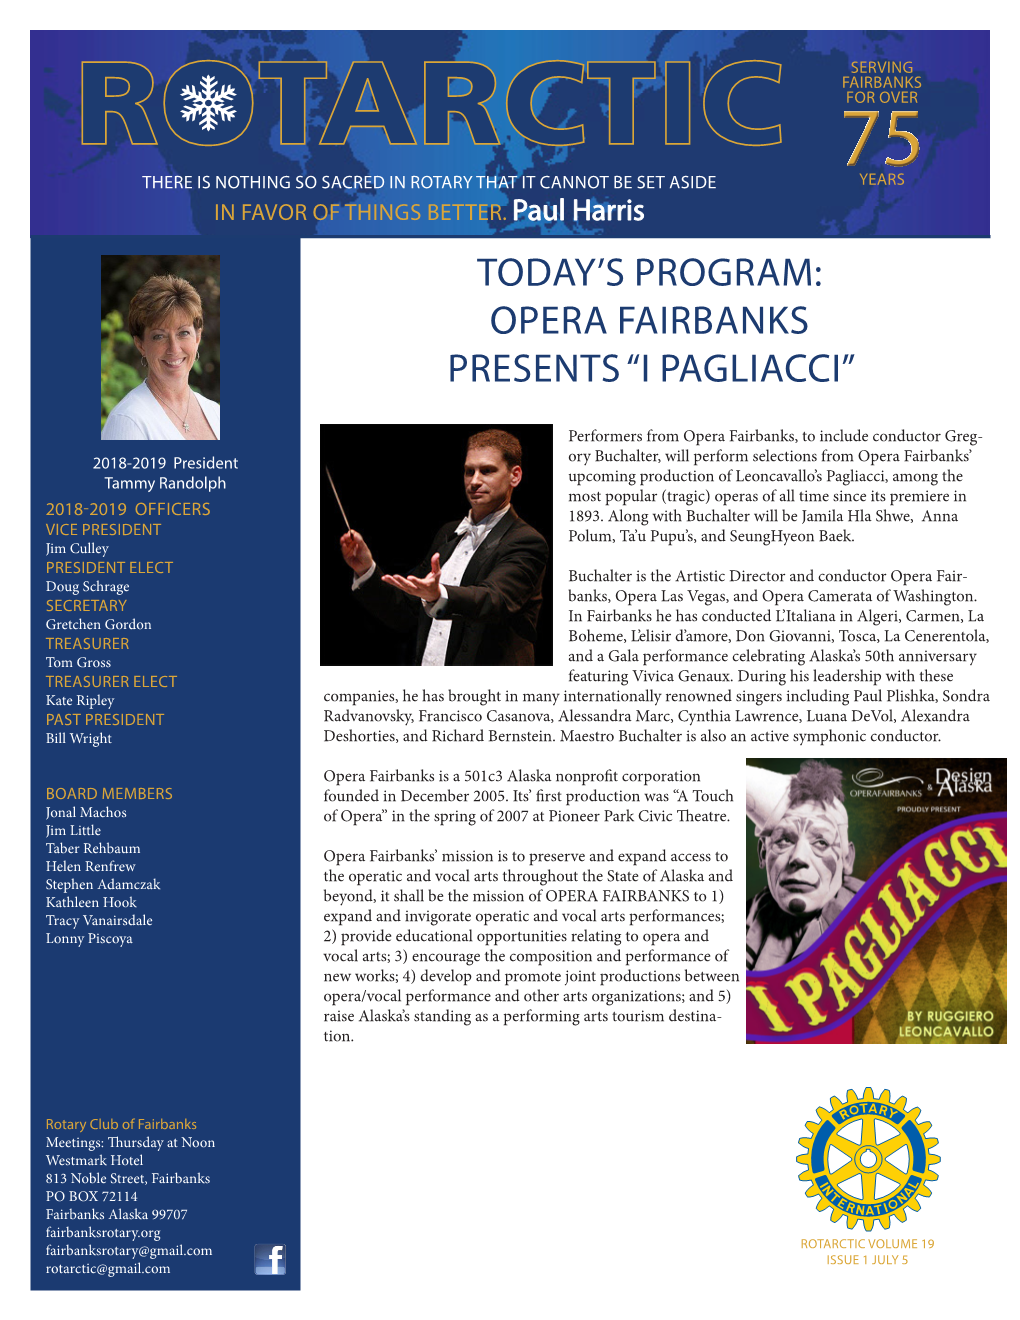 Opera Fairbanks Presents “I Pagliacci”